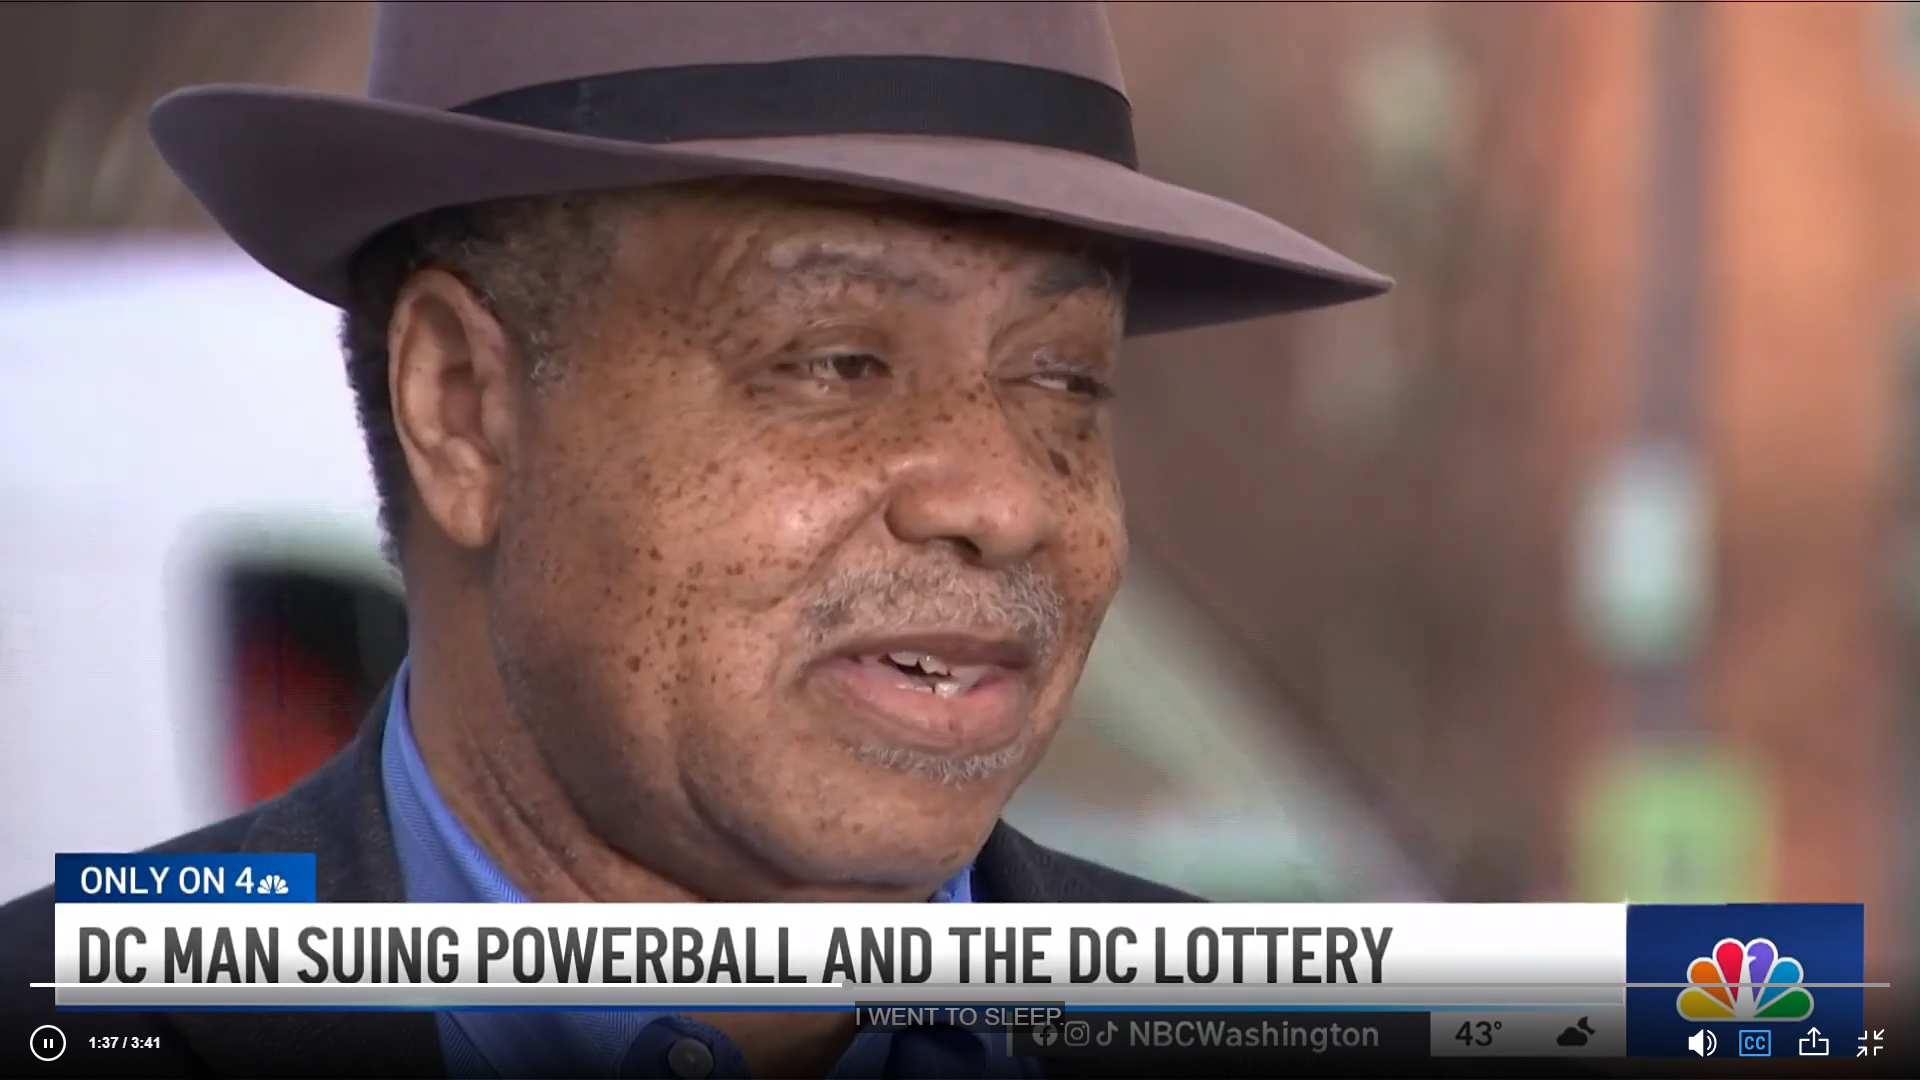 John Cheeks of Washington DC is suing the Powerball lottery